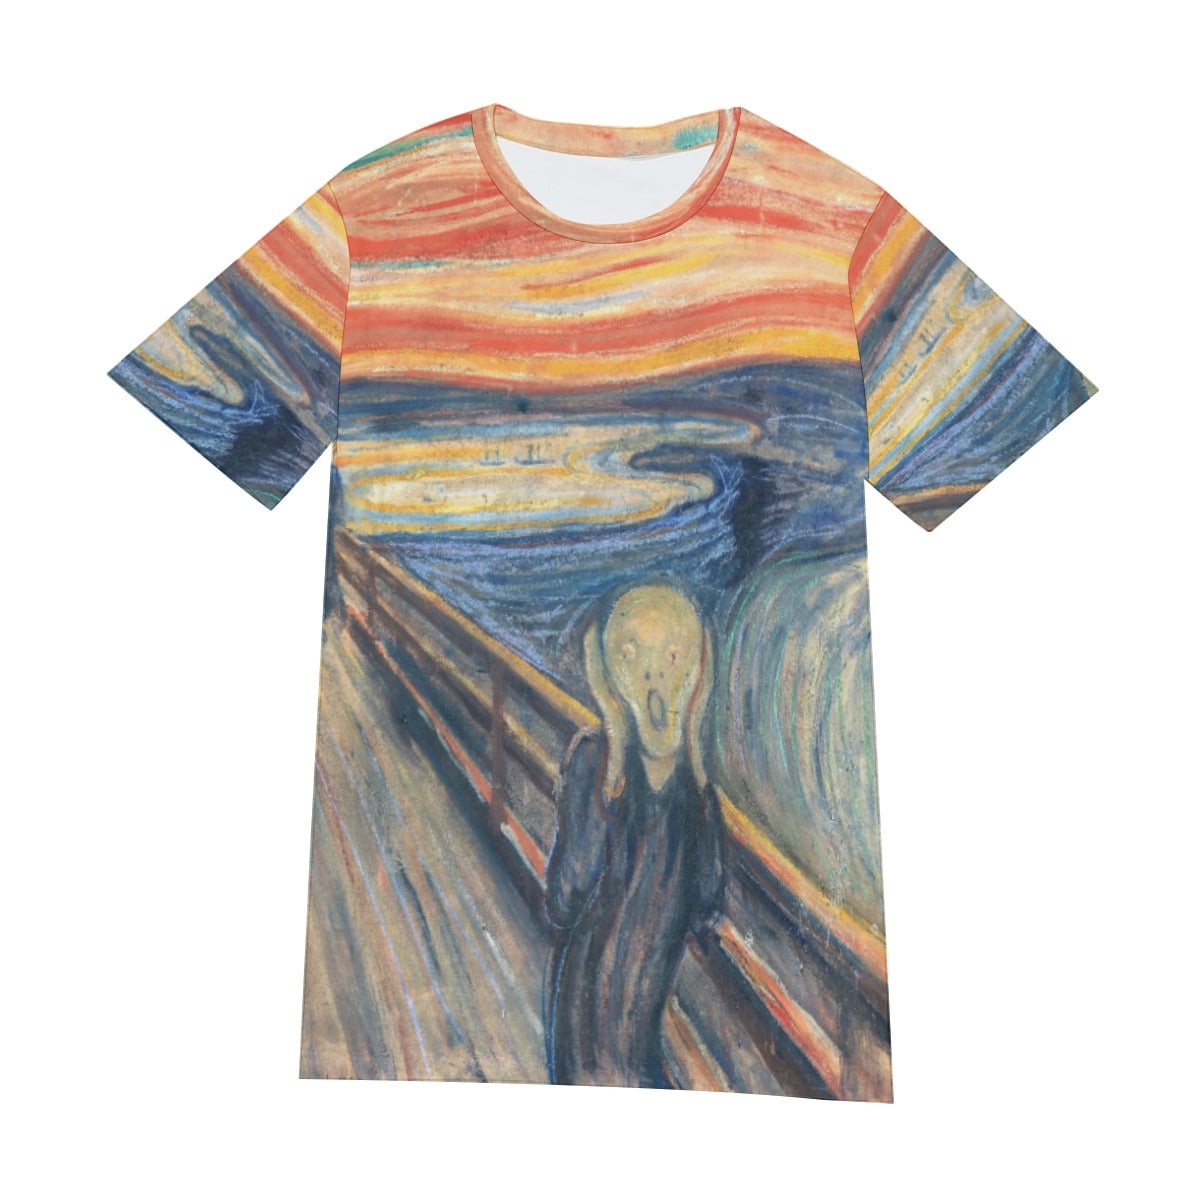 The Scream by Edvard Munch Painting T-Shirt